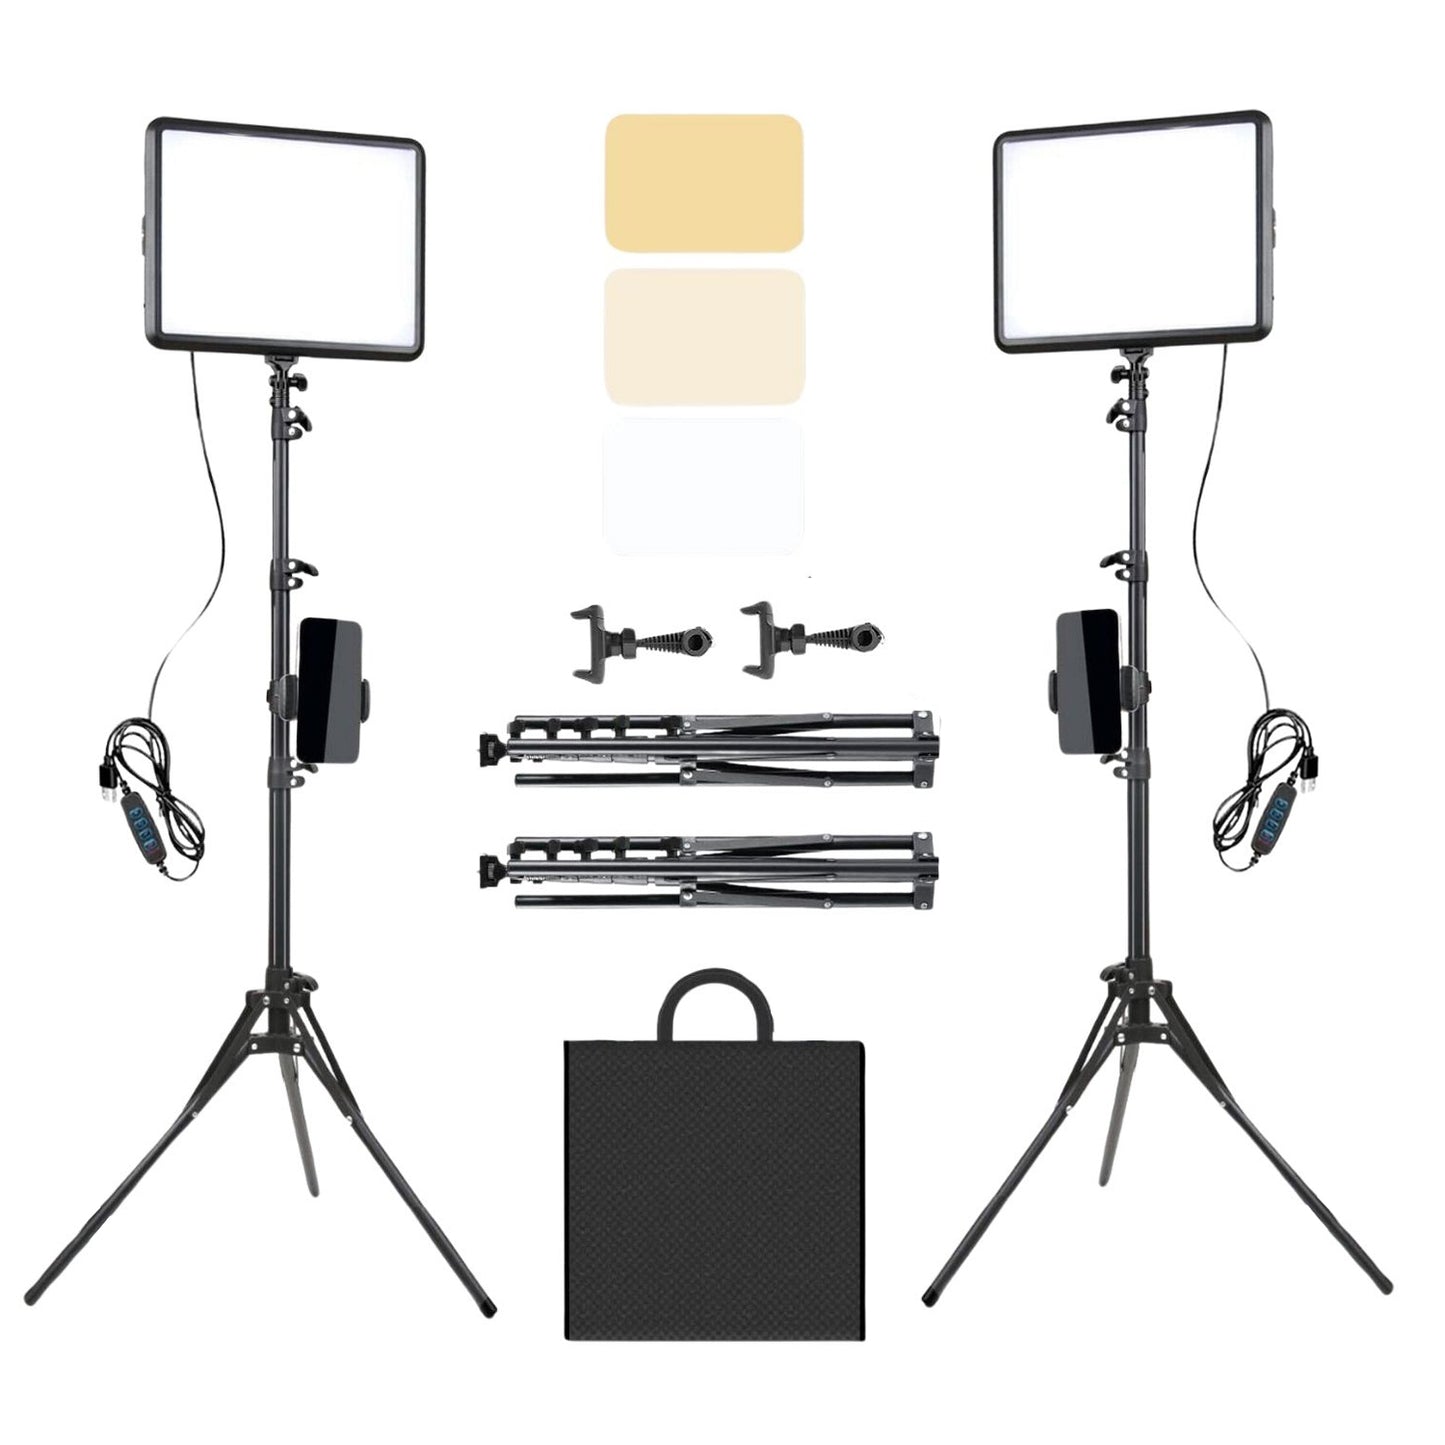 StudioPro 2 PC Panel Lighting Kit w/ Carry Bag for Studio Photography Video